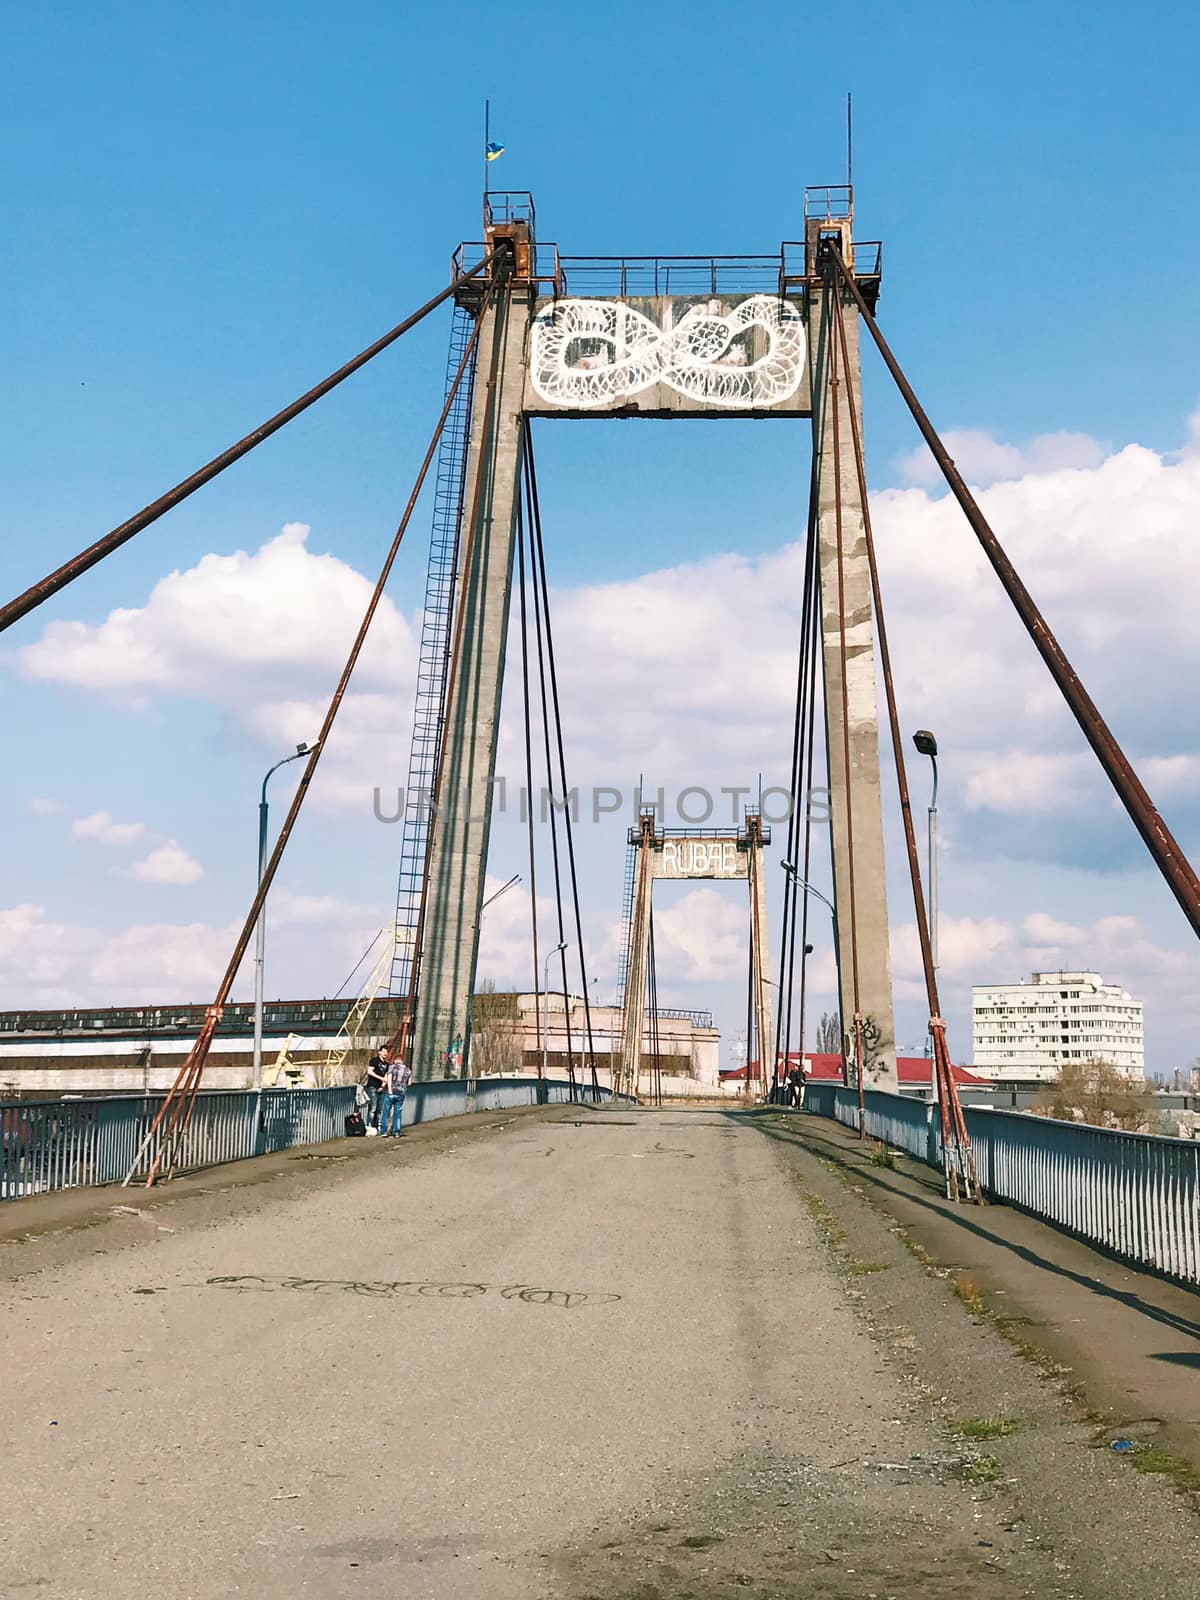 Abandoned old bridge big engineering construction by Softulka